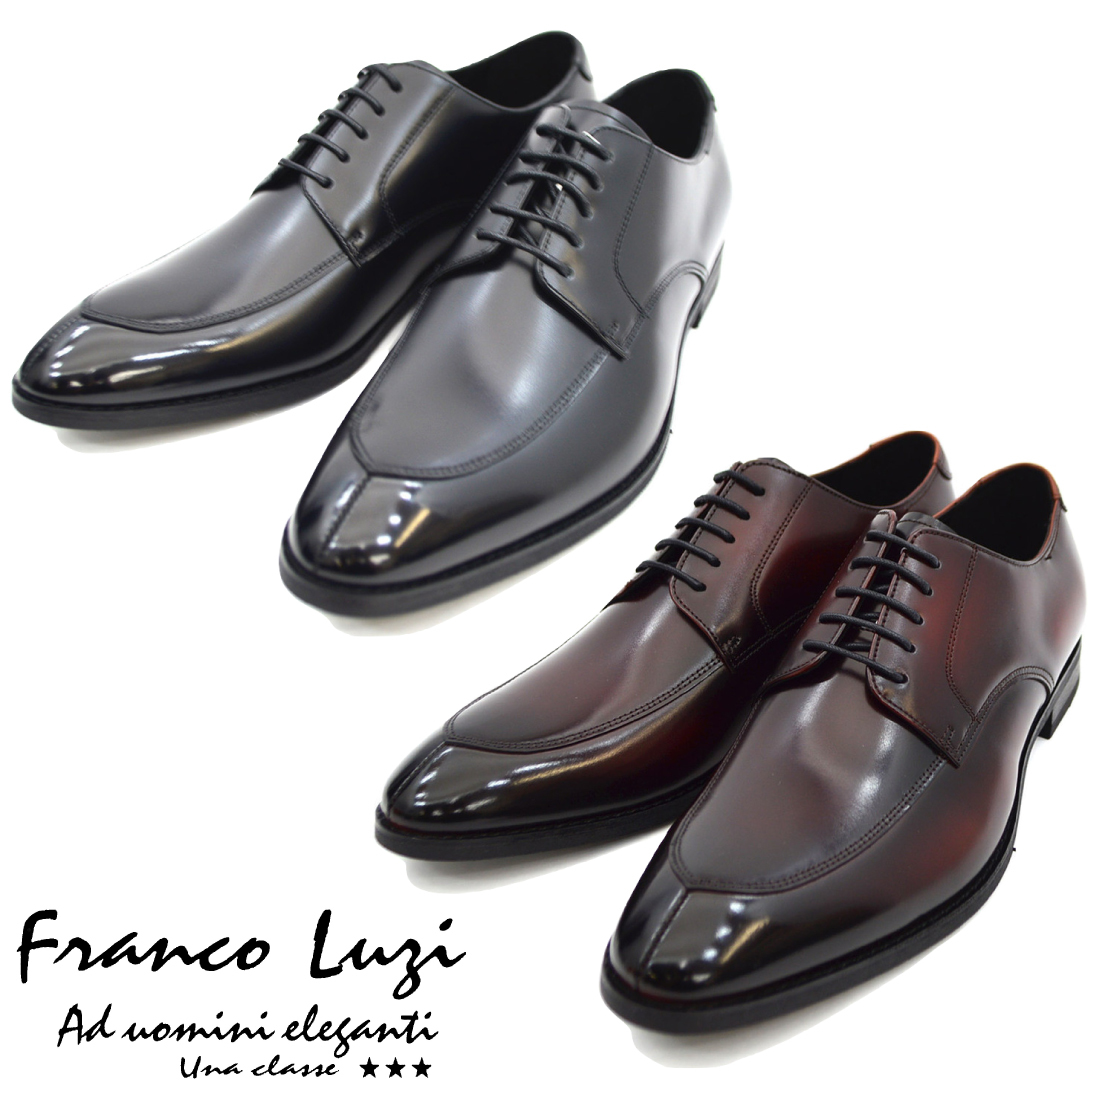 ▲FRANCO LUZI フランコ ルッチ 2000 ビジネスシューズ Uチップ 紳士靴 革靴 メンズ ブラック Black 黒 25.5cm (0910010549-bk-s255) l6789tKLNOyzEFUY-33031 25.5cm